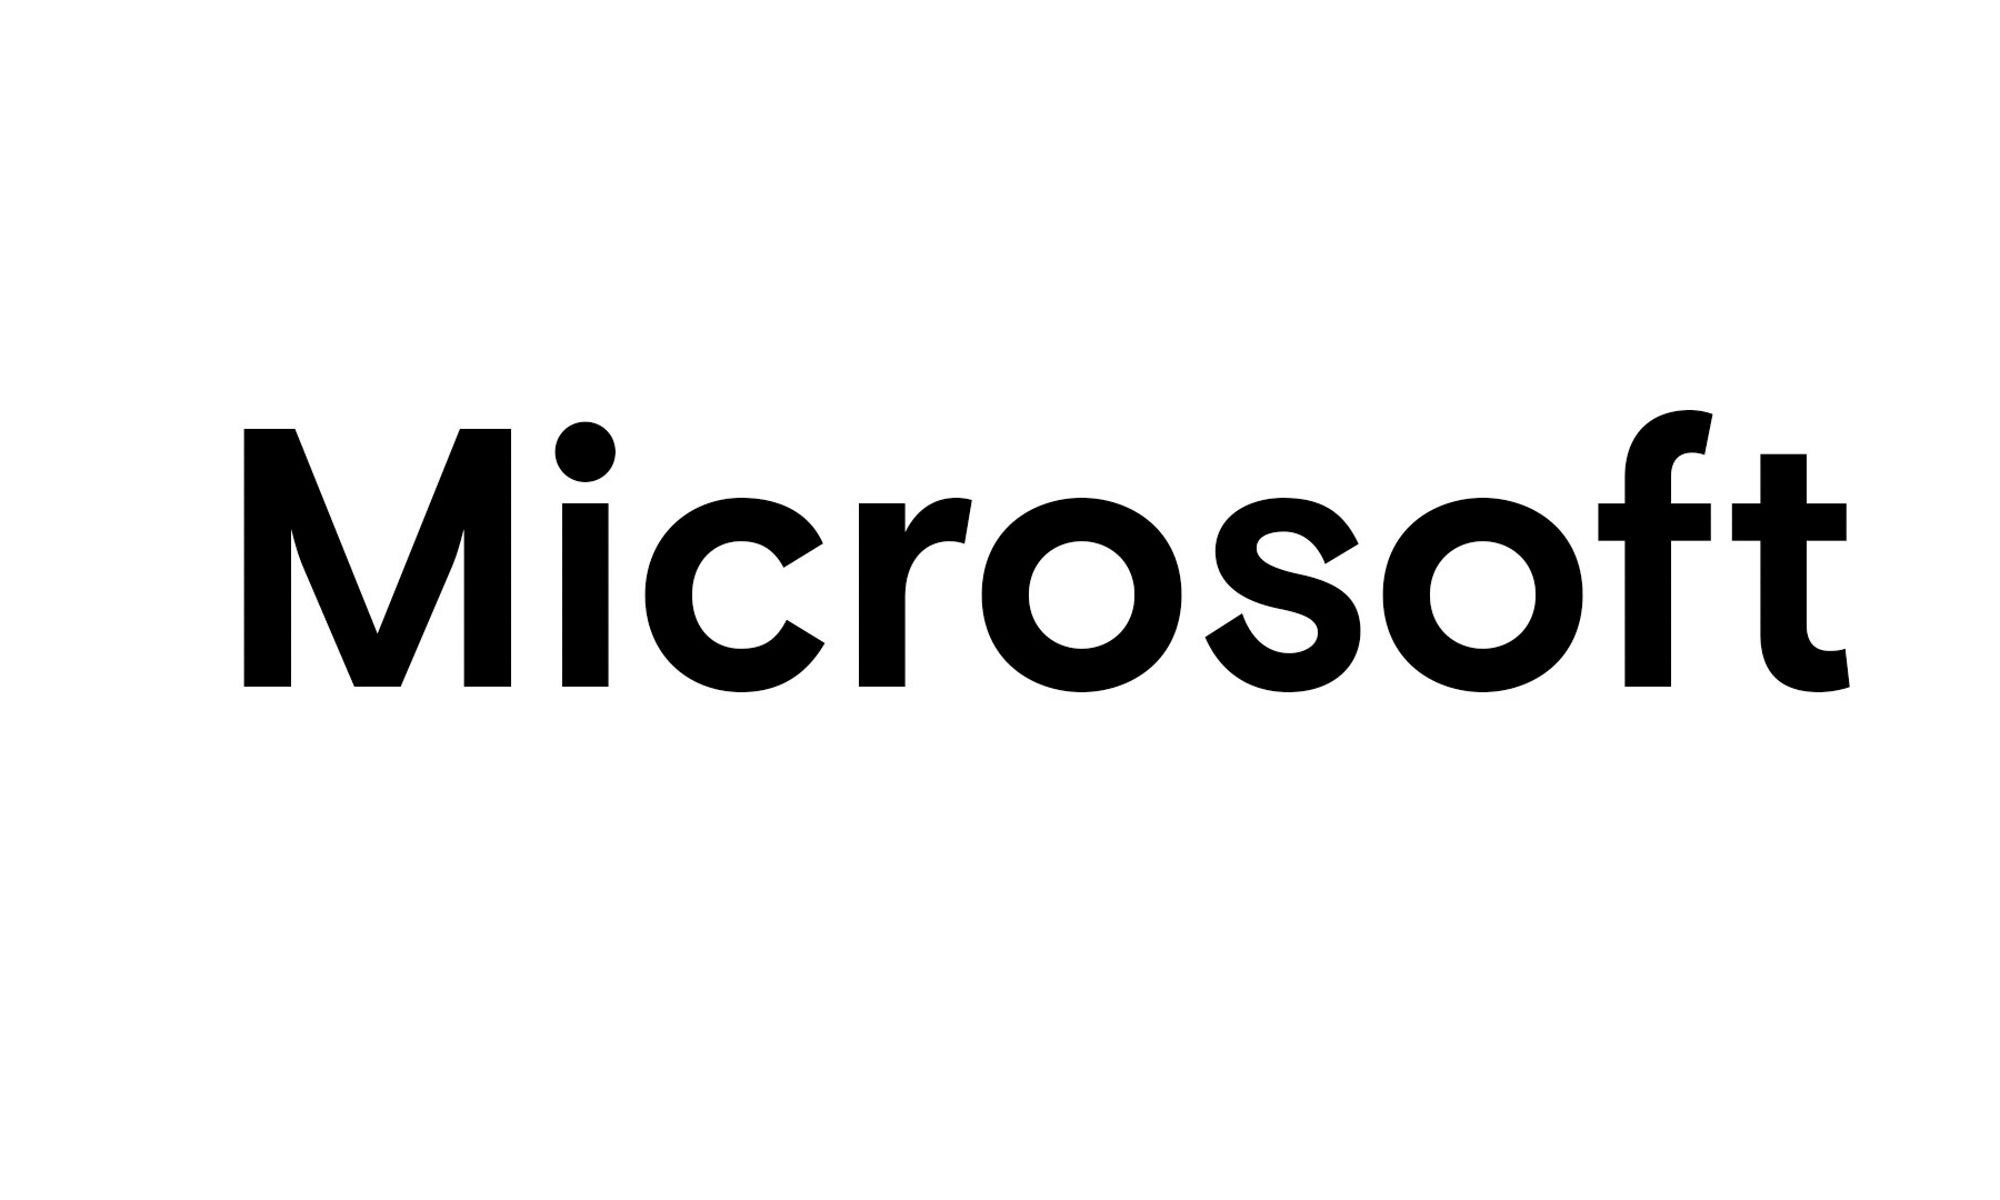 Microsoft text